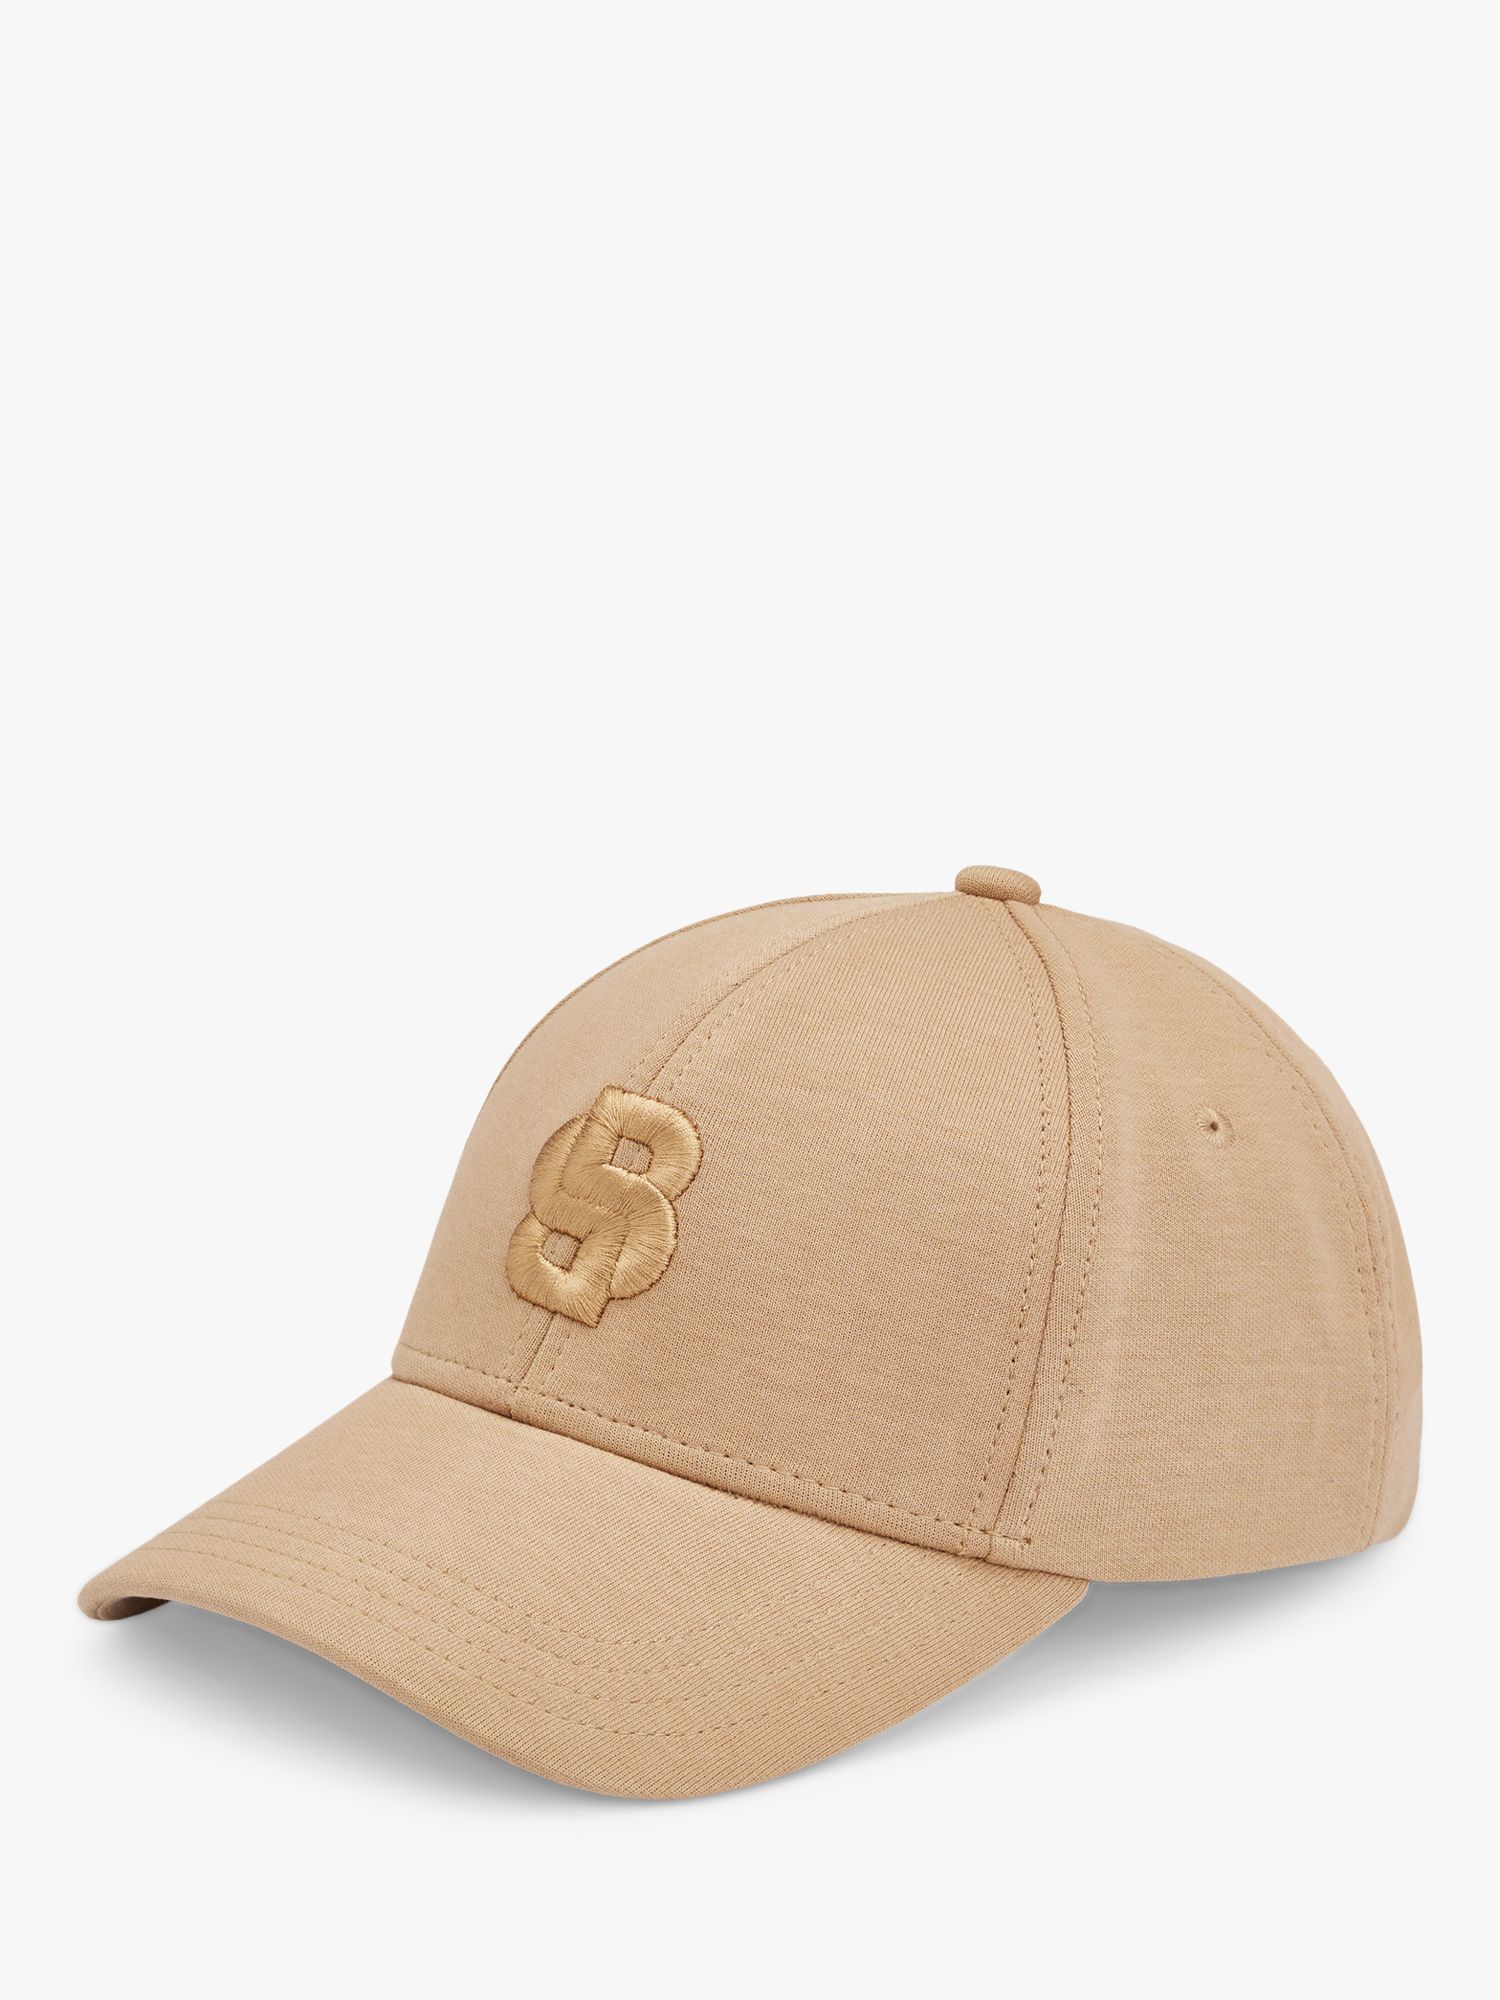 BOSS Zed Iconic Baseball Cap, Beige, One Size